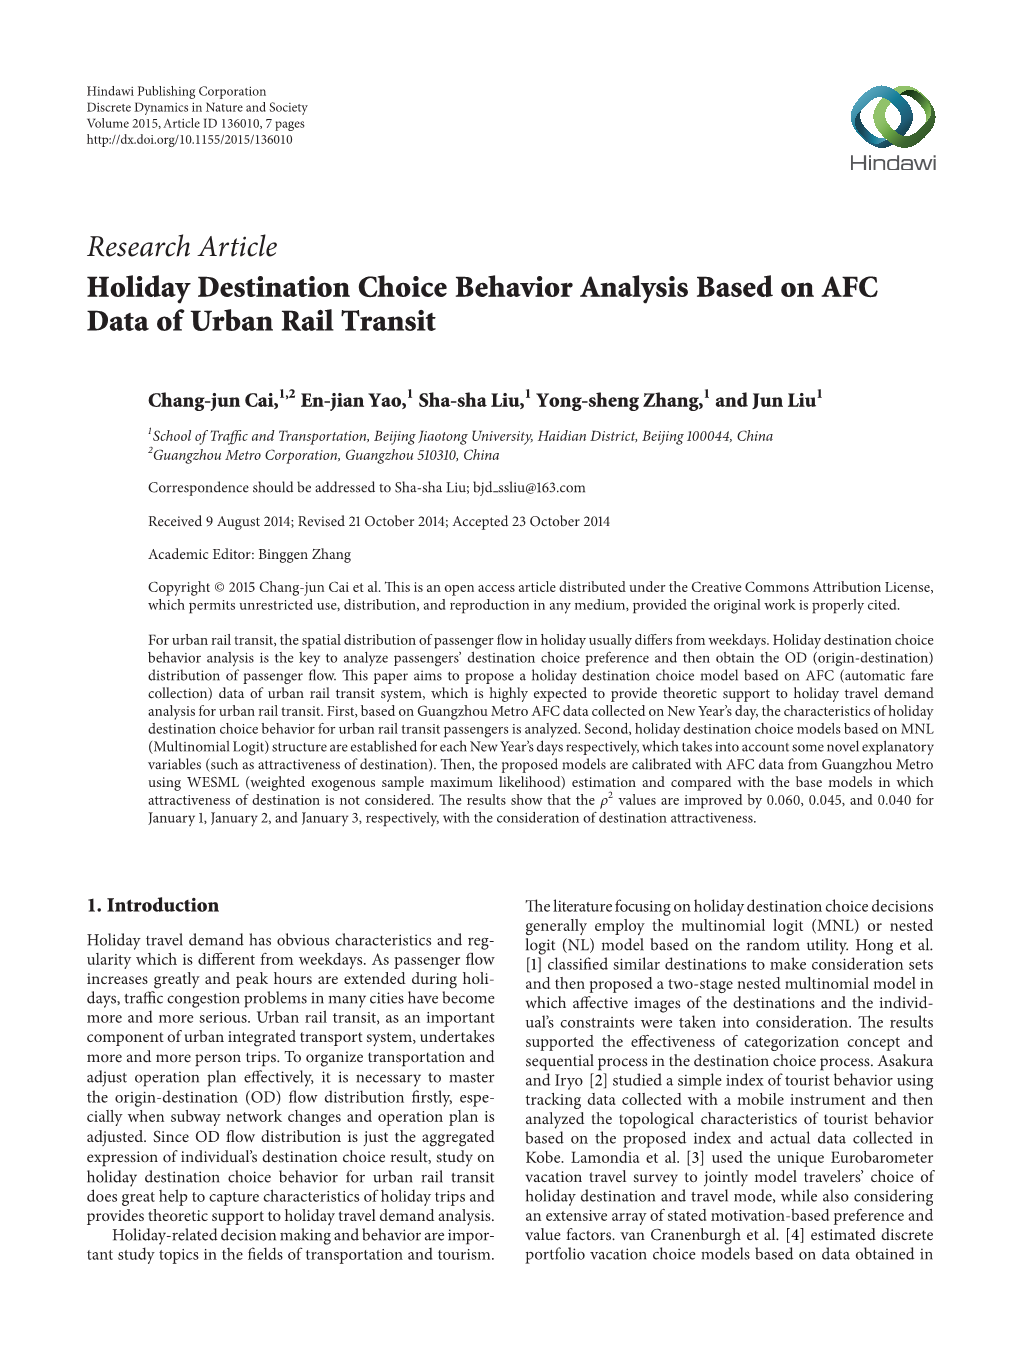 Holiday Destination Choice Behavior Analysis Based on AFC Data of Urban Rail Transit